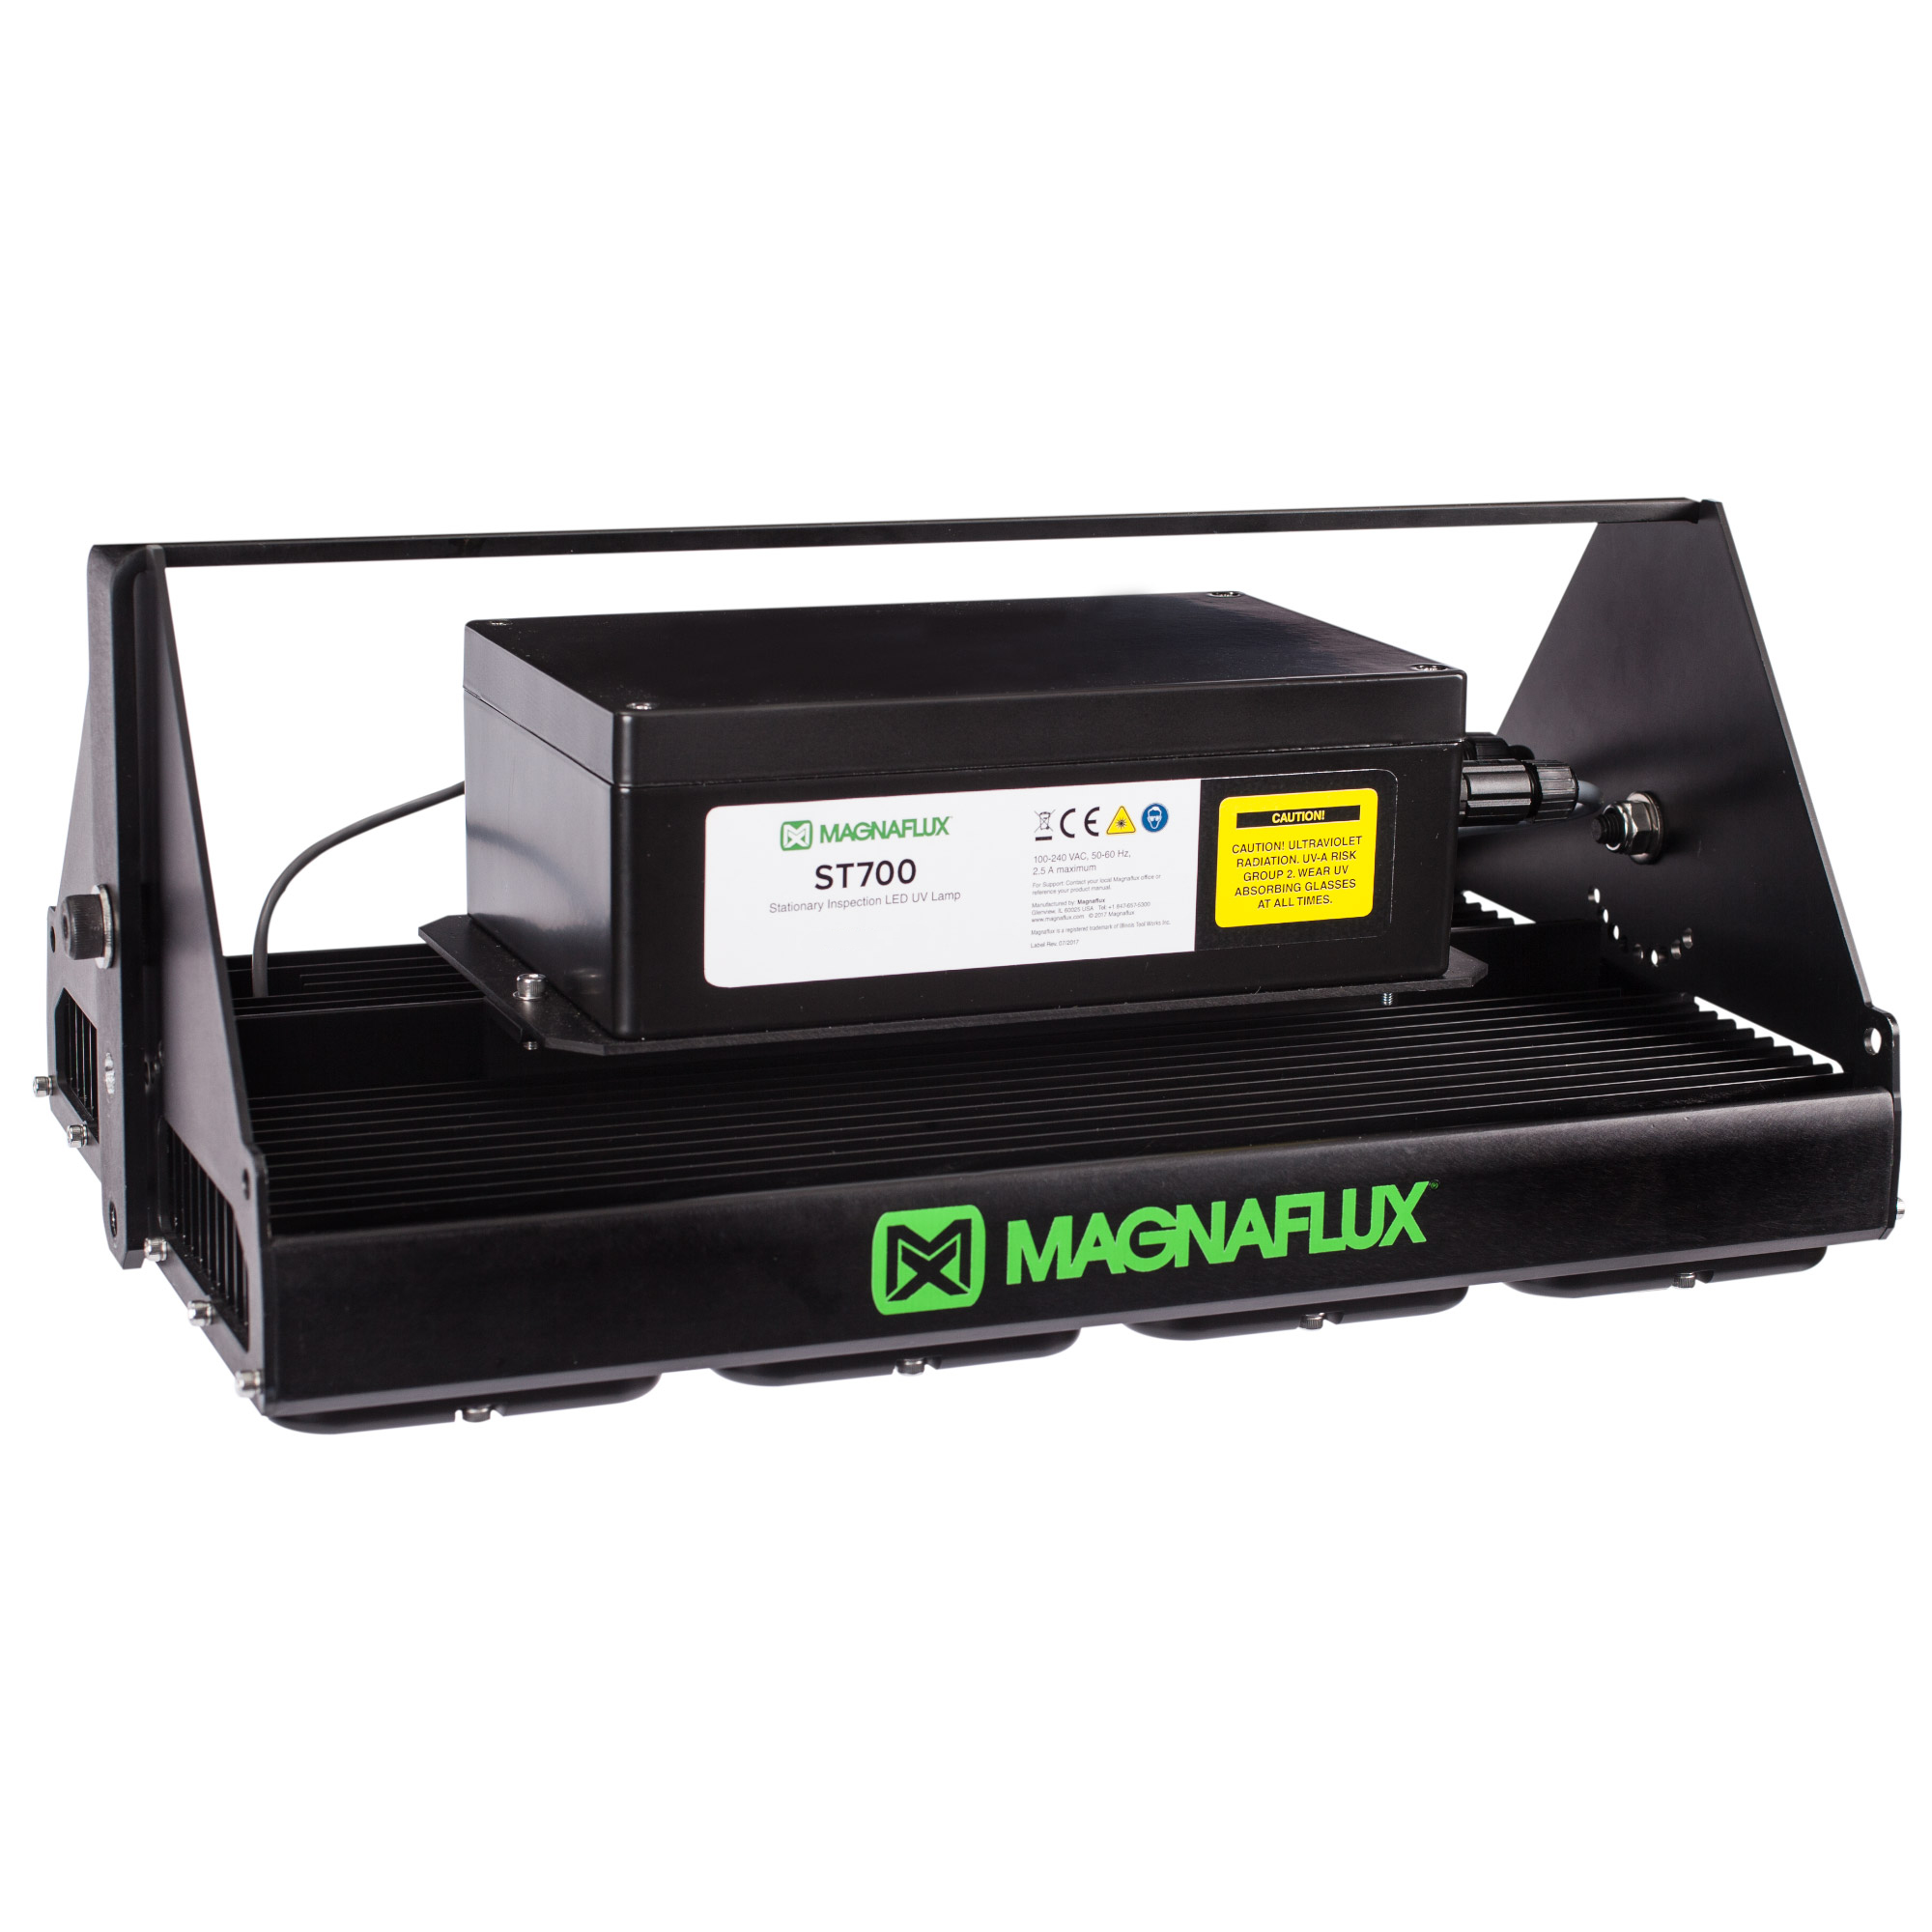 Magnaflux - ST700 - Luminária estacionária de luz LED ultravioleta